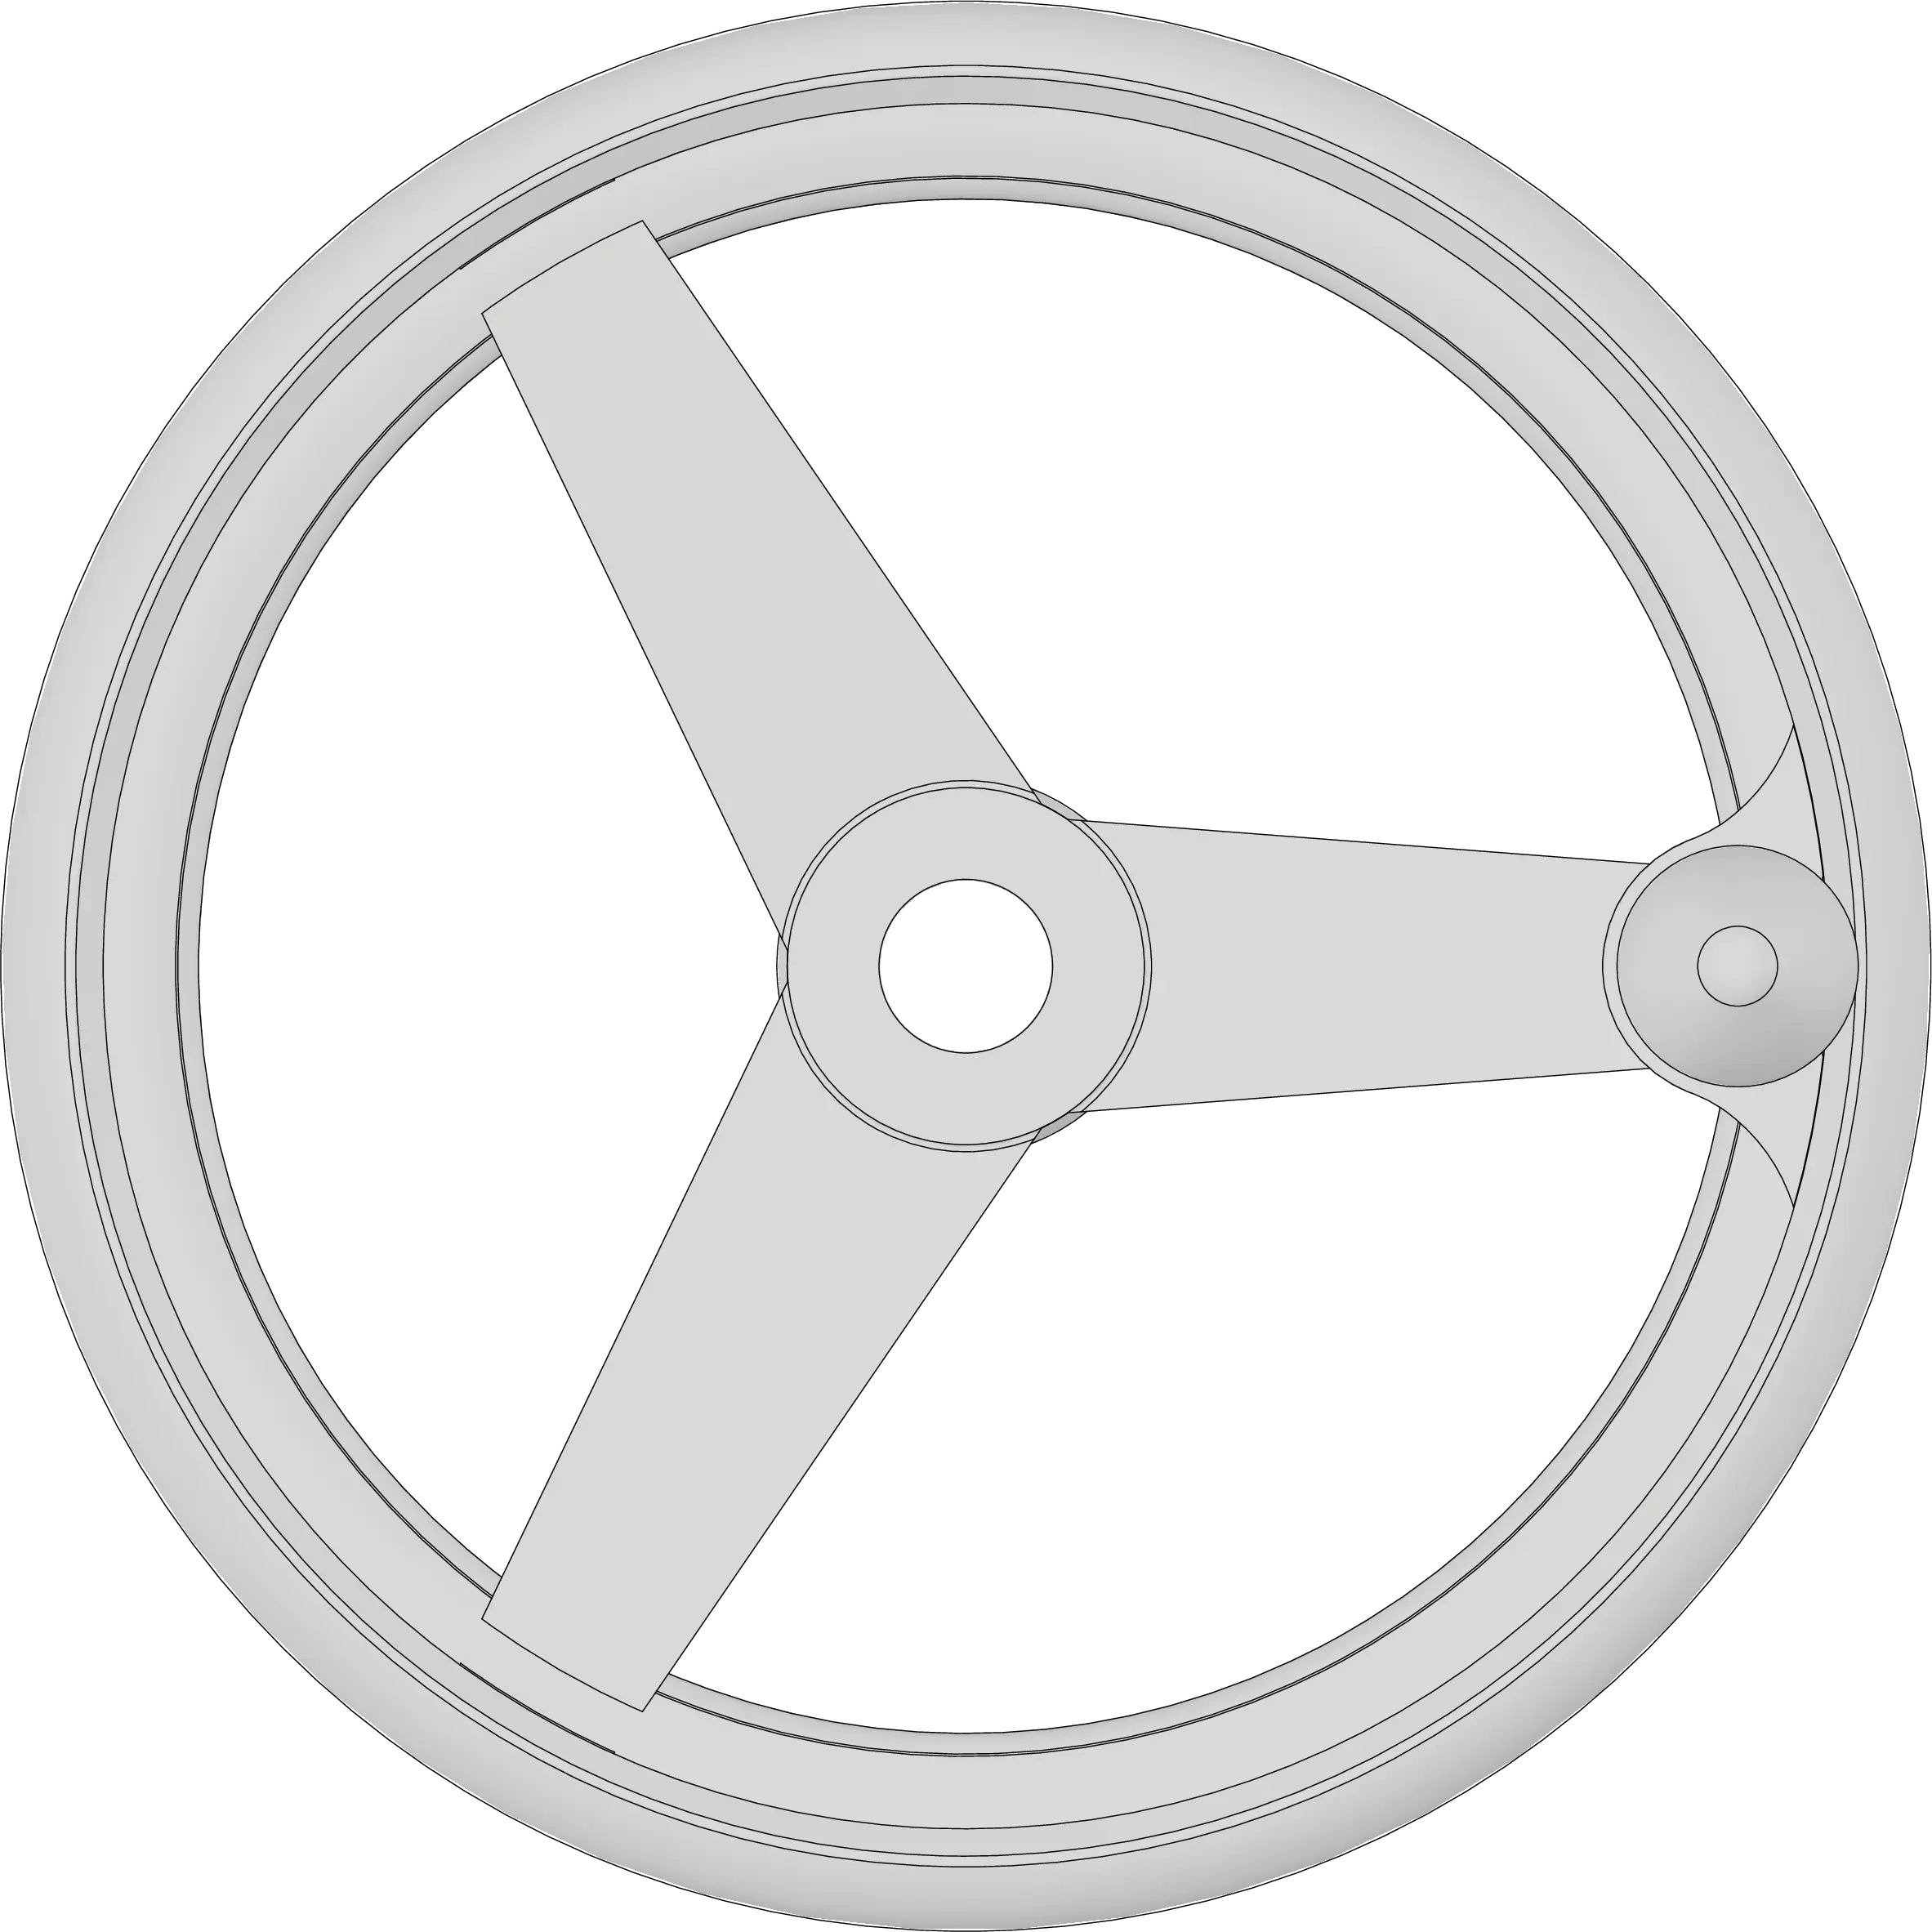 Handwheel with ball knob top view